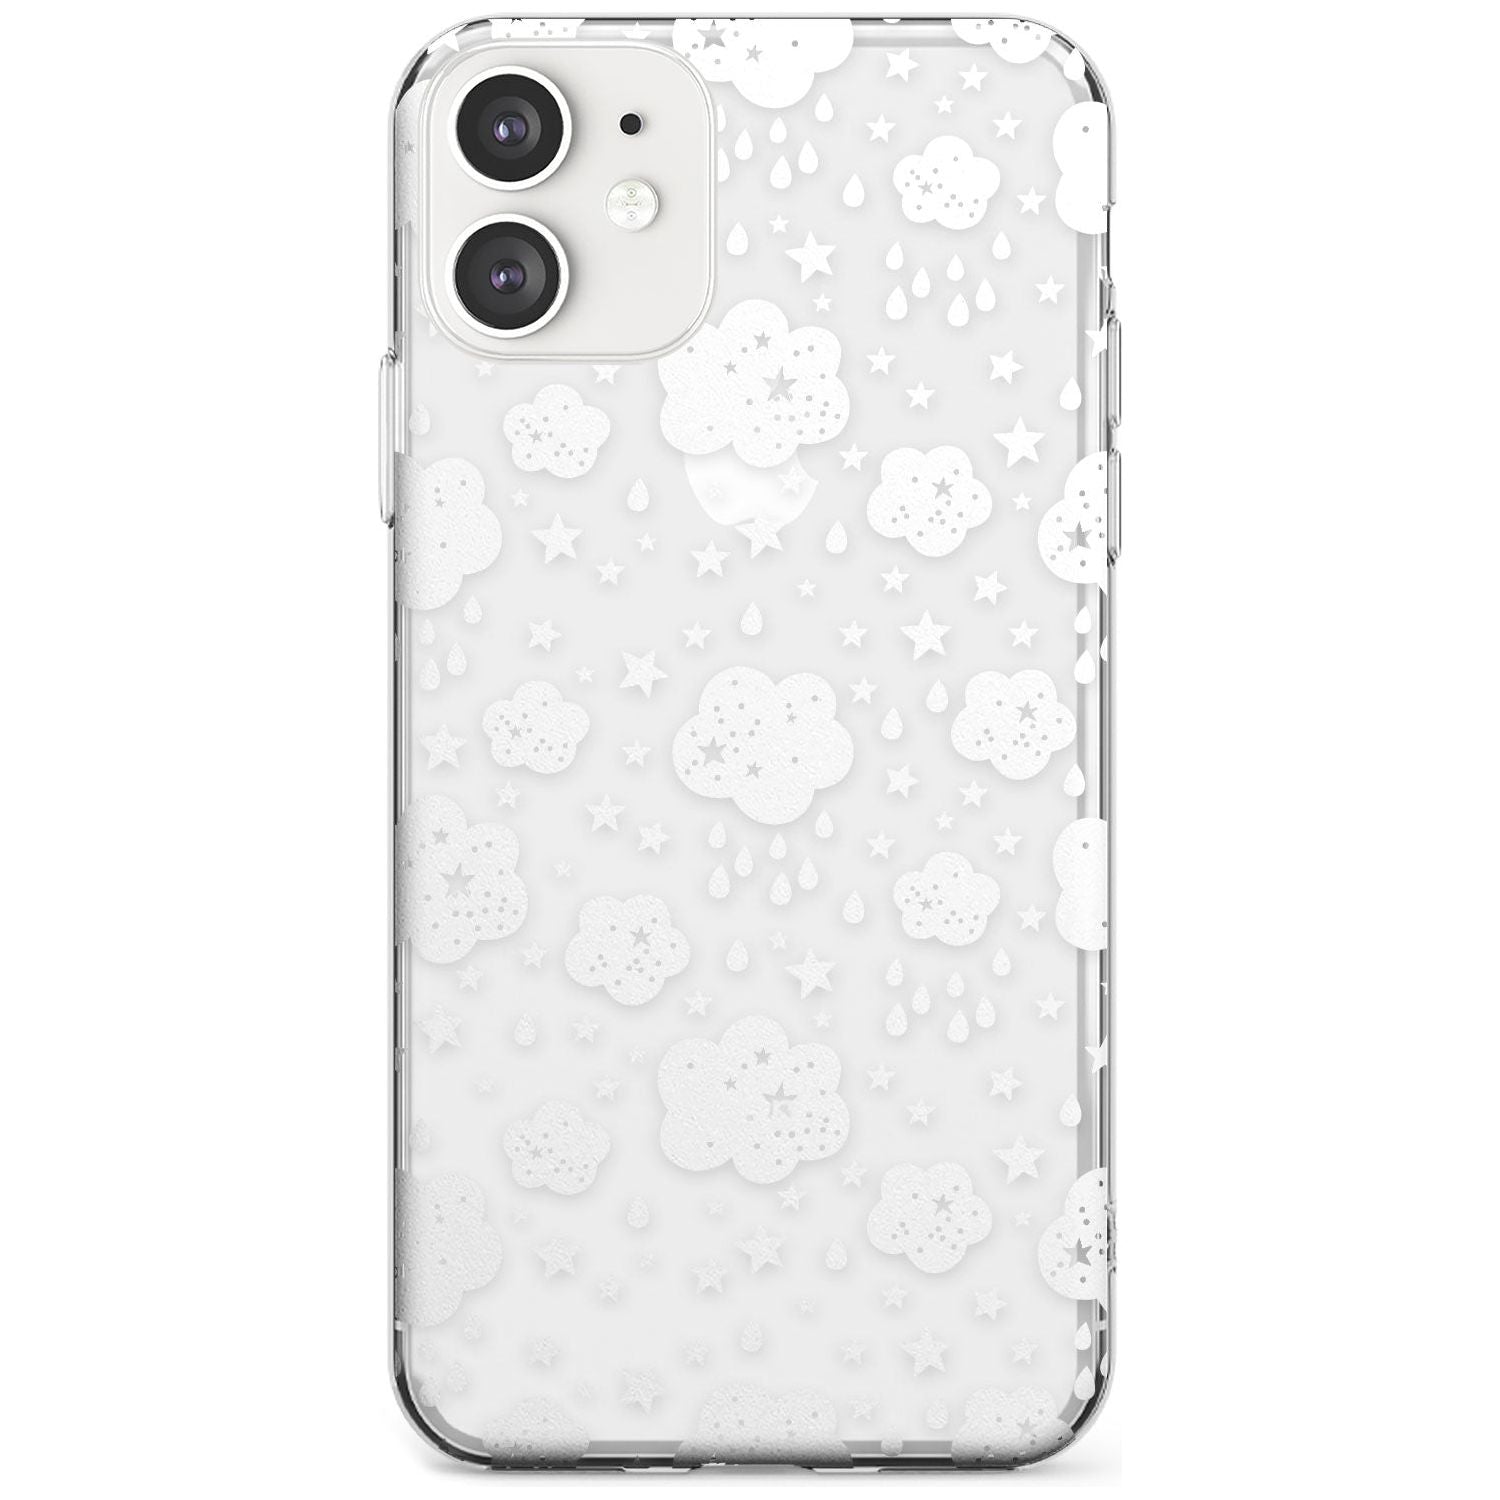 Rainy Days Slim TPU Phone Case for iPhone 11